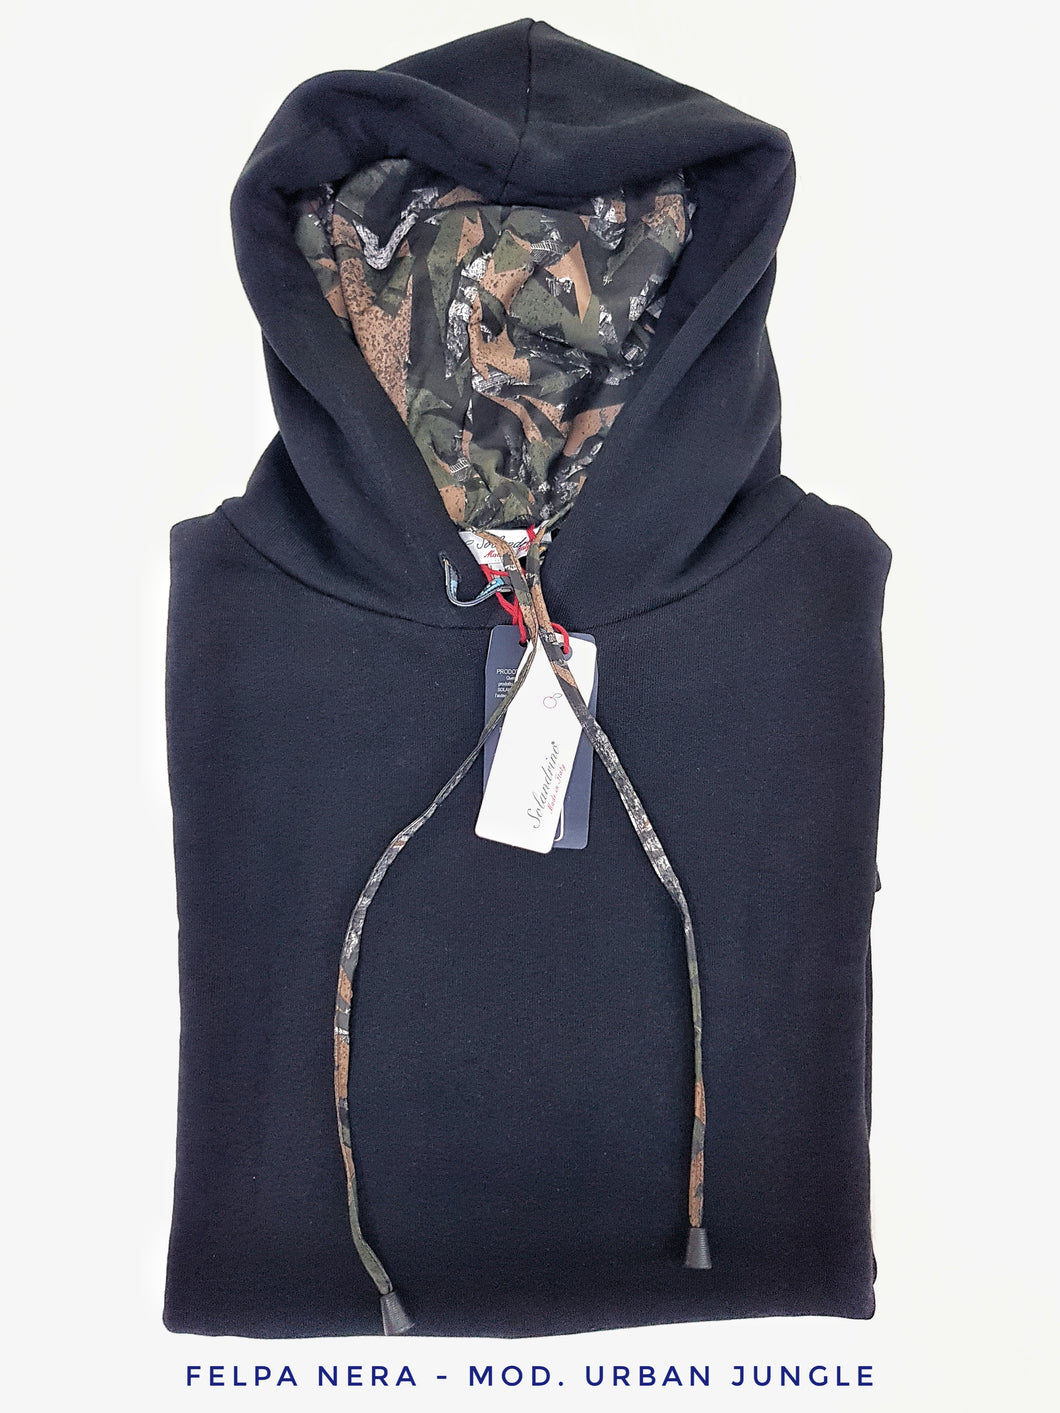 Felpa Nera con Cappuccio Design urban jungle made in Italy Fantasia  100% cotone -  Unisex Sweatshirt Black Hoodie